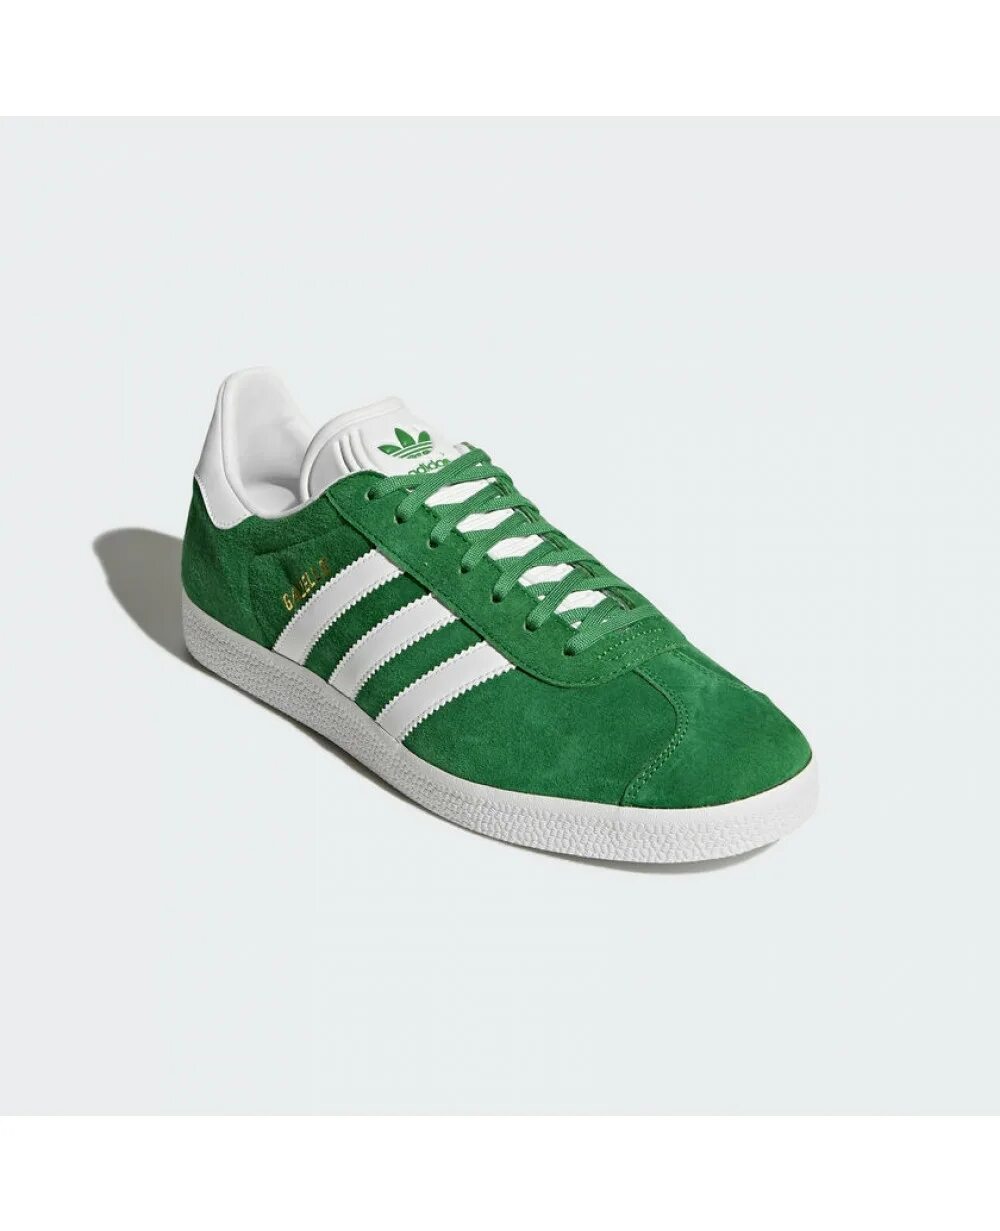 Кроссовки adidas Gazelle Green. Adidas Gazelle зеленые. Adidas Gazelle Green Original. Adidas кеды Gazelle зеленый. Зеленые кроссовки adidas